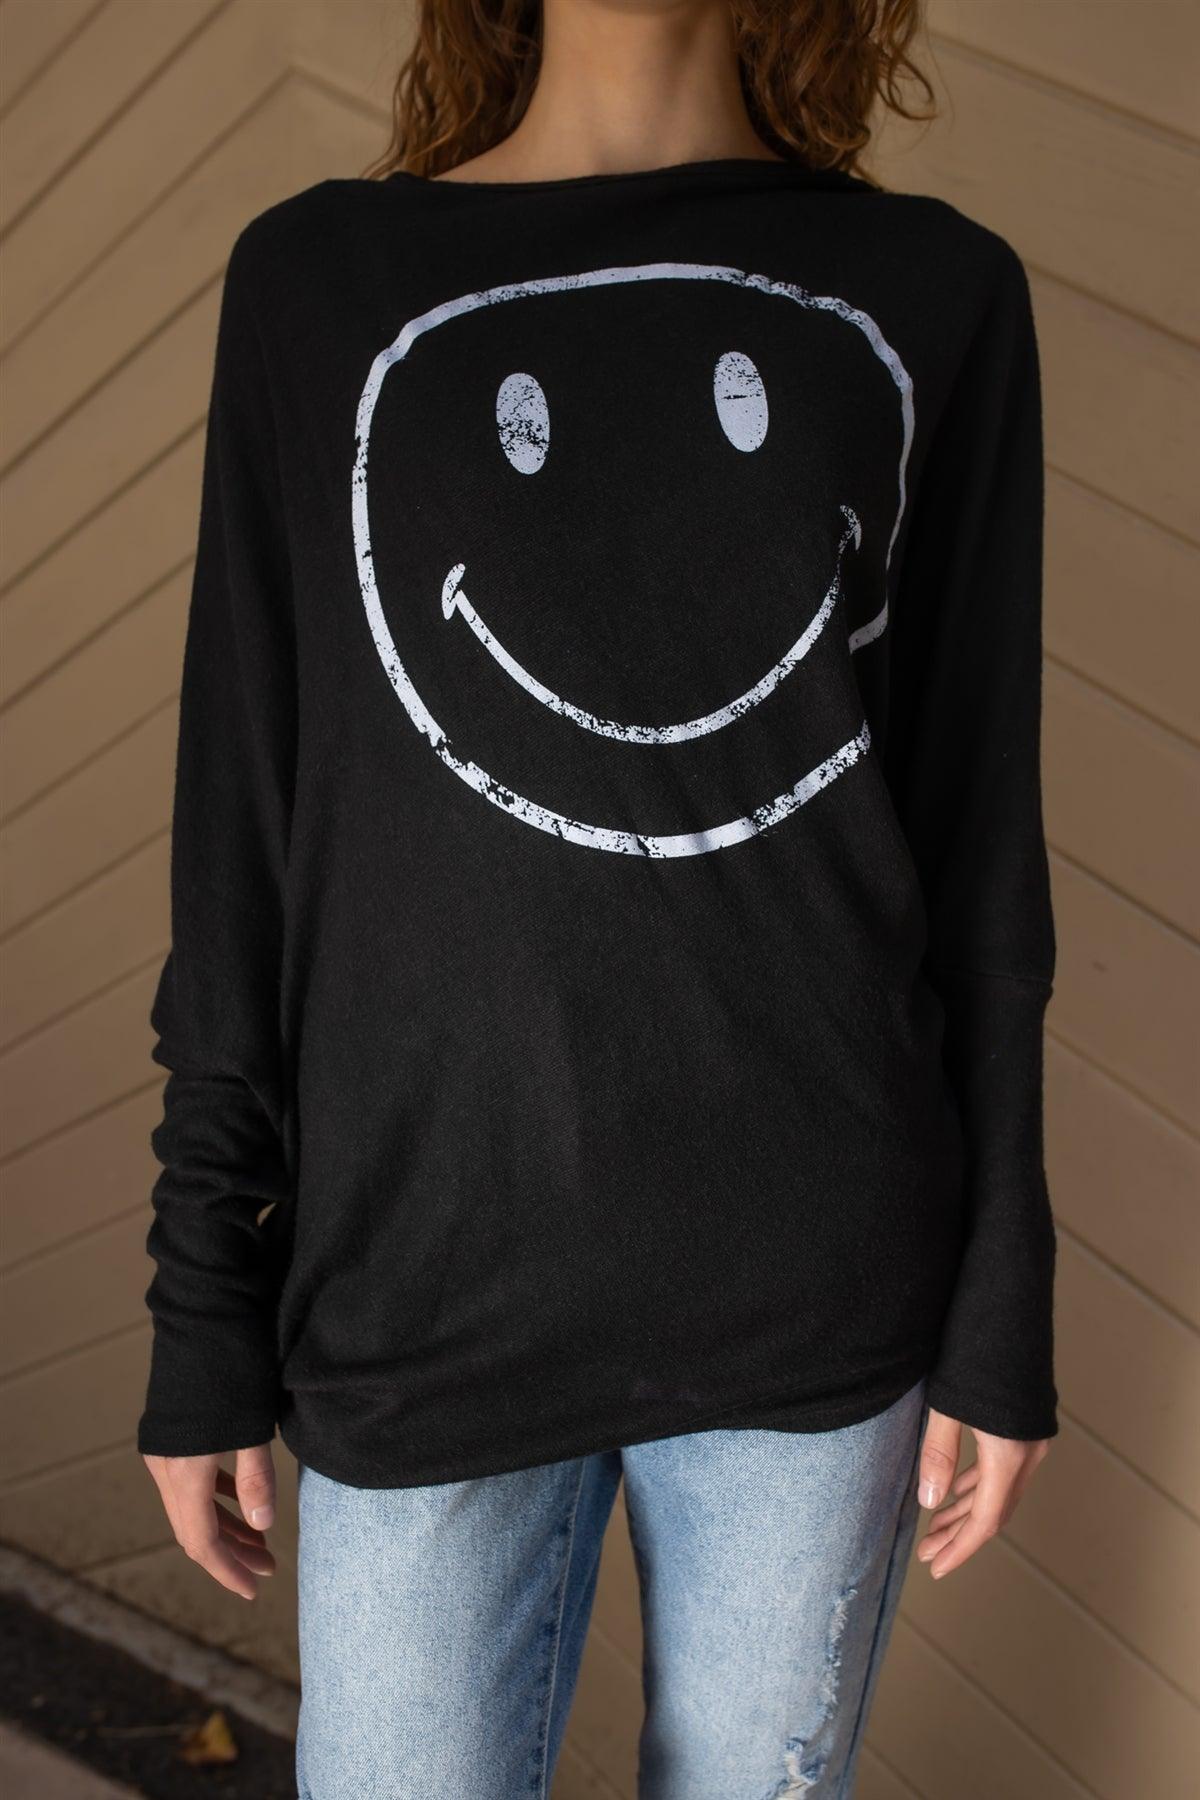 Black Smile Front Print Flannel Dolman Sleeve Top /2-2-2